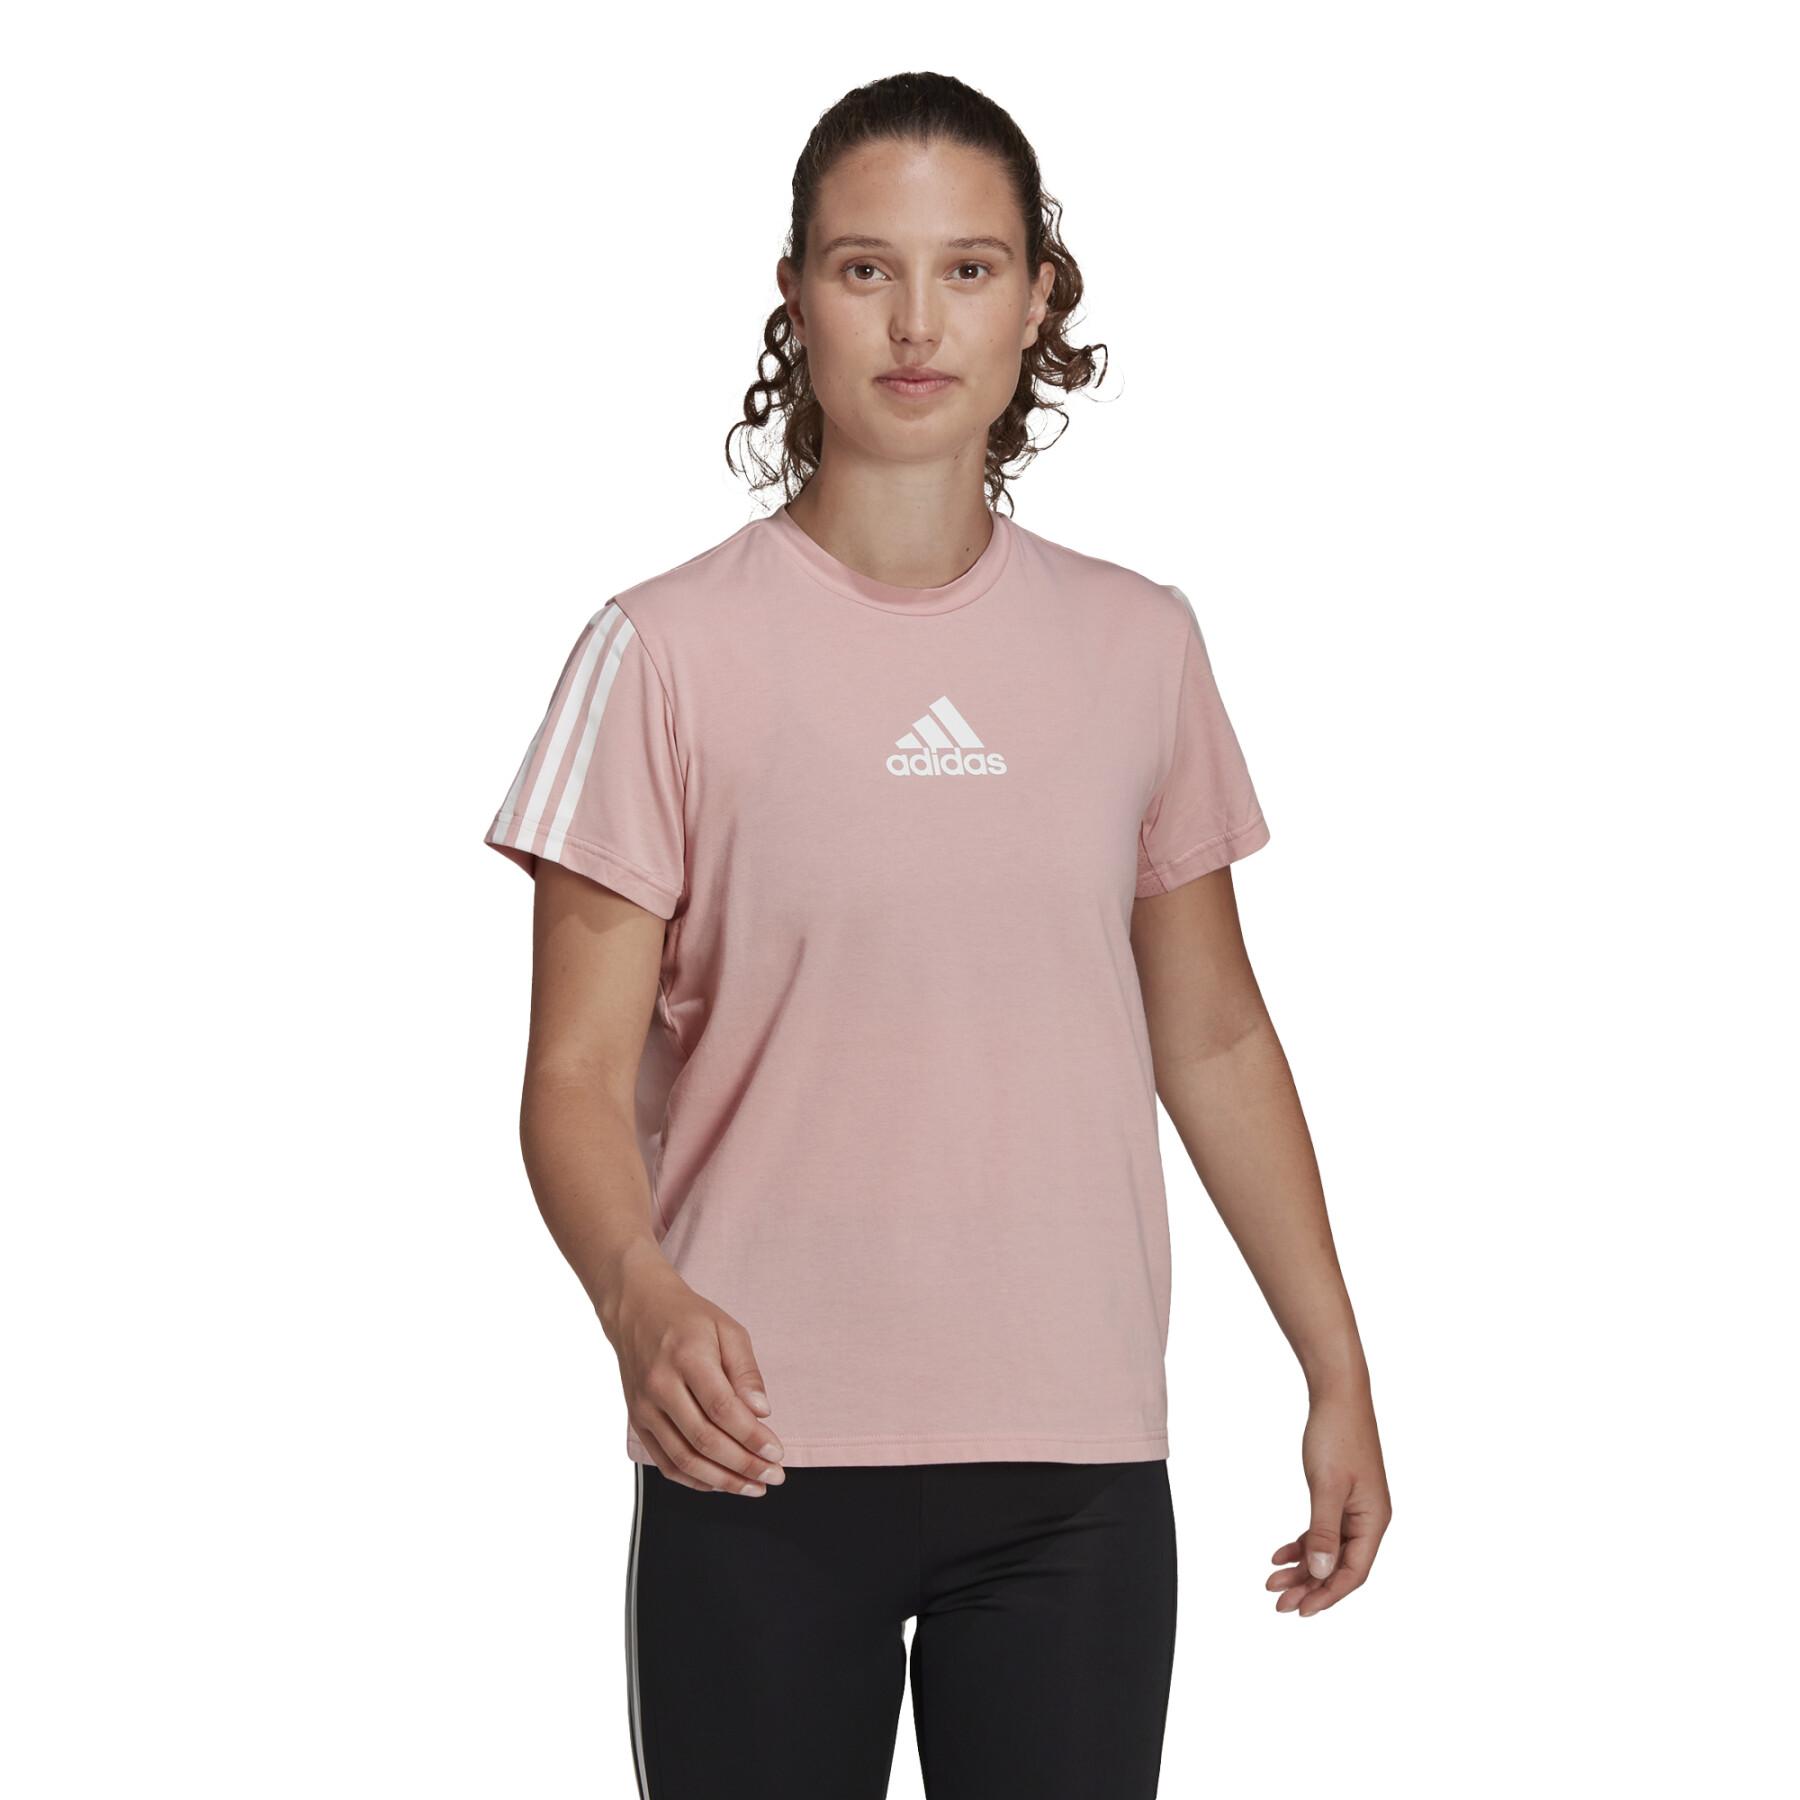 Camiseta feminina adidas Aeroready Made For Training Cotton-Touch